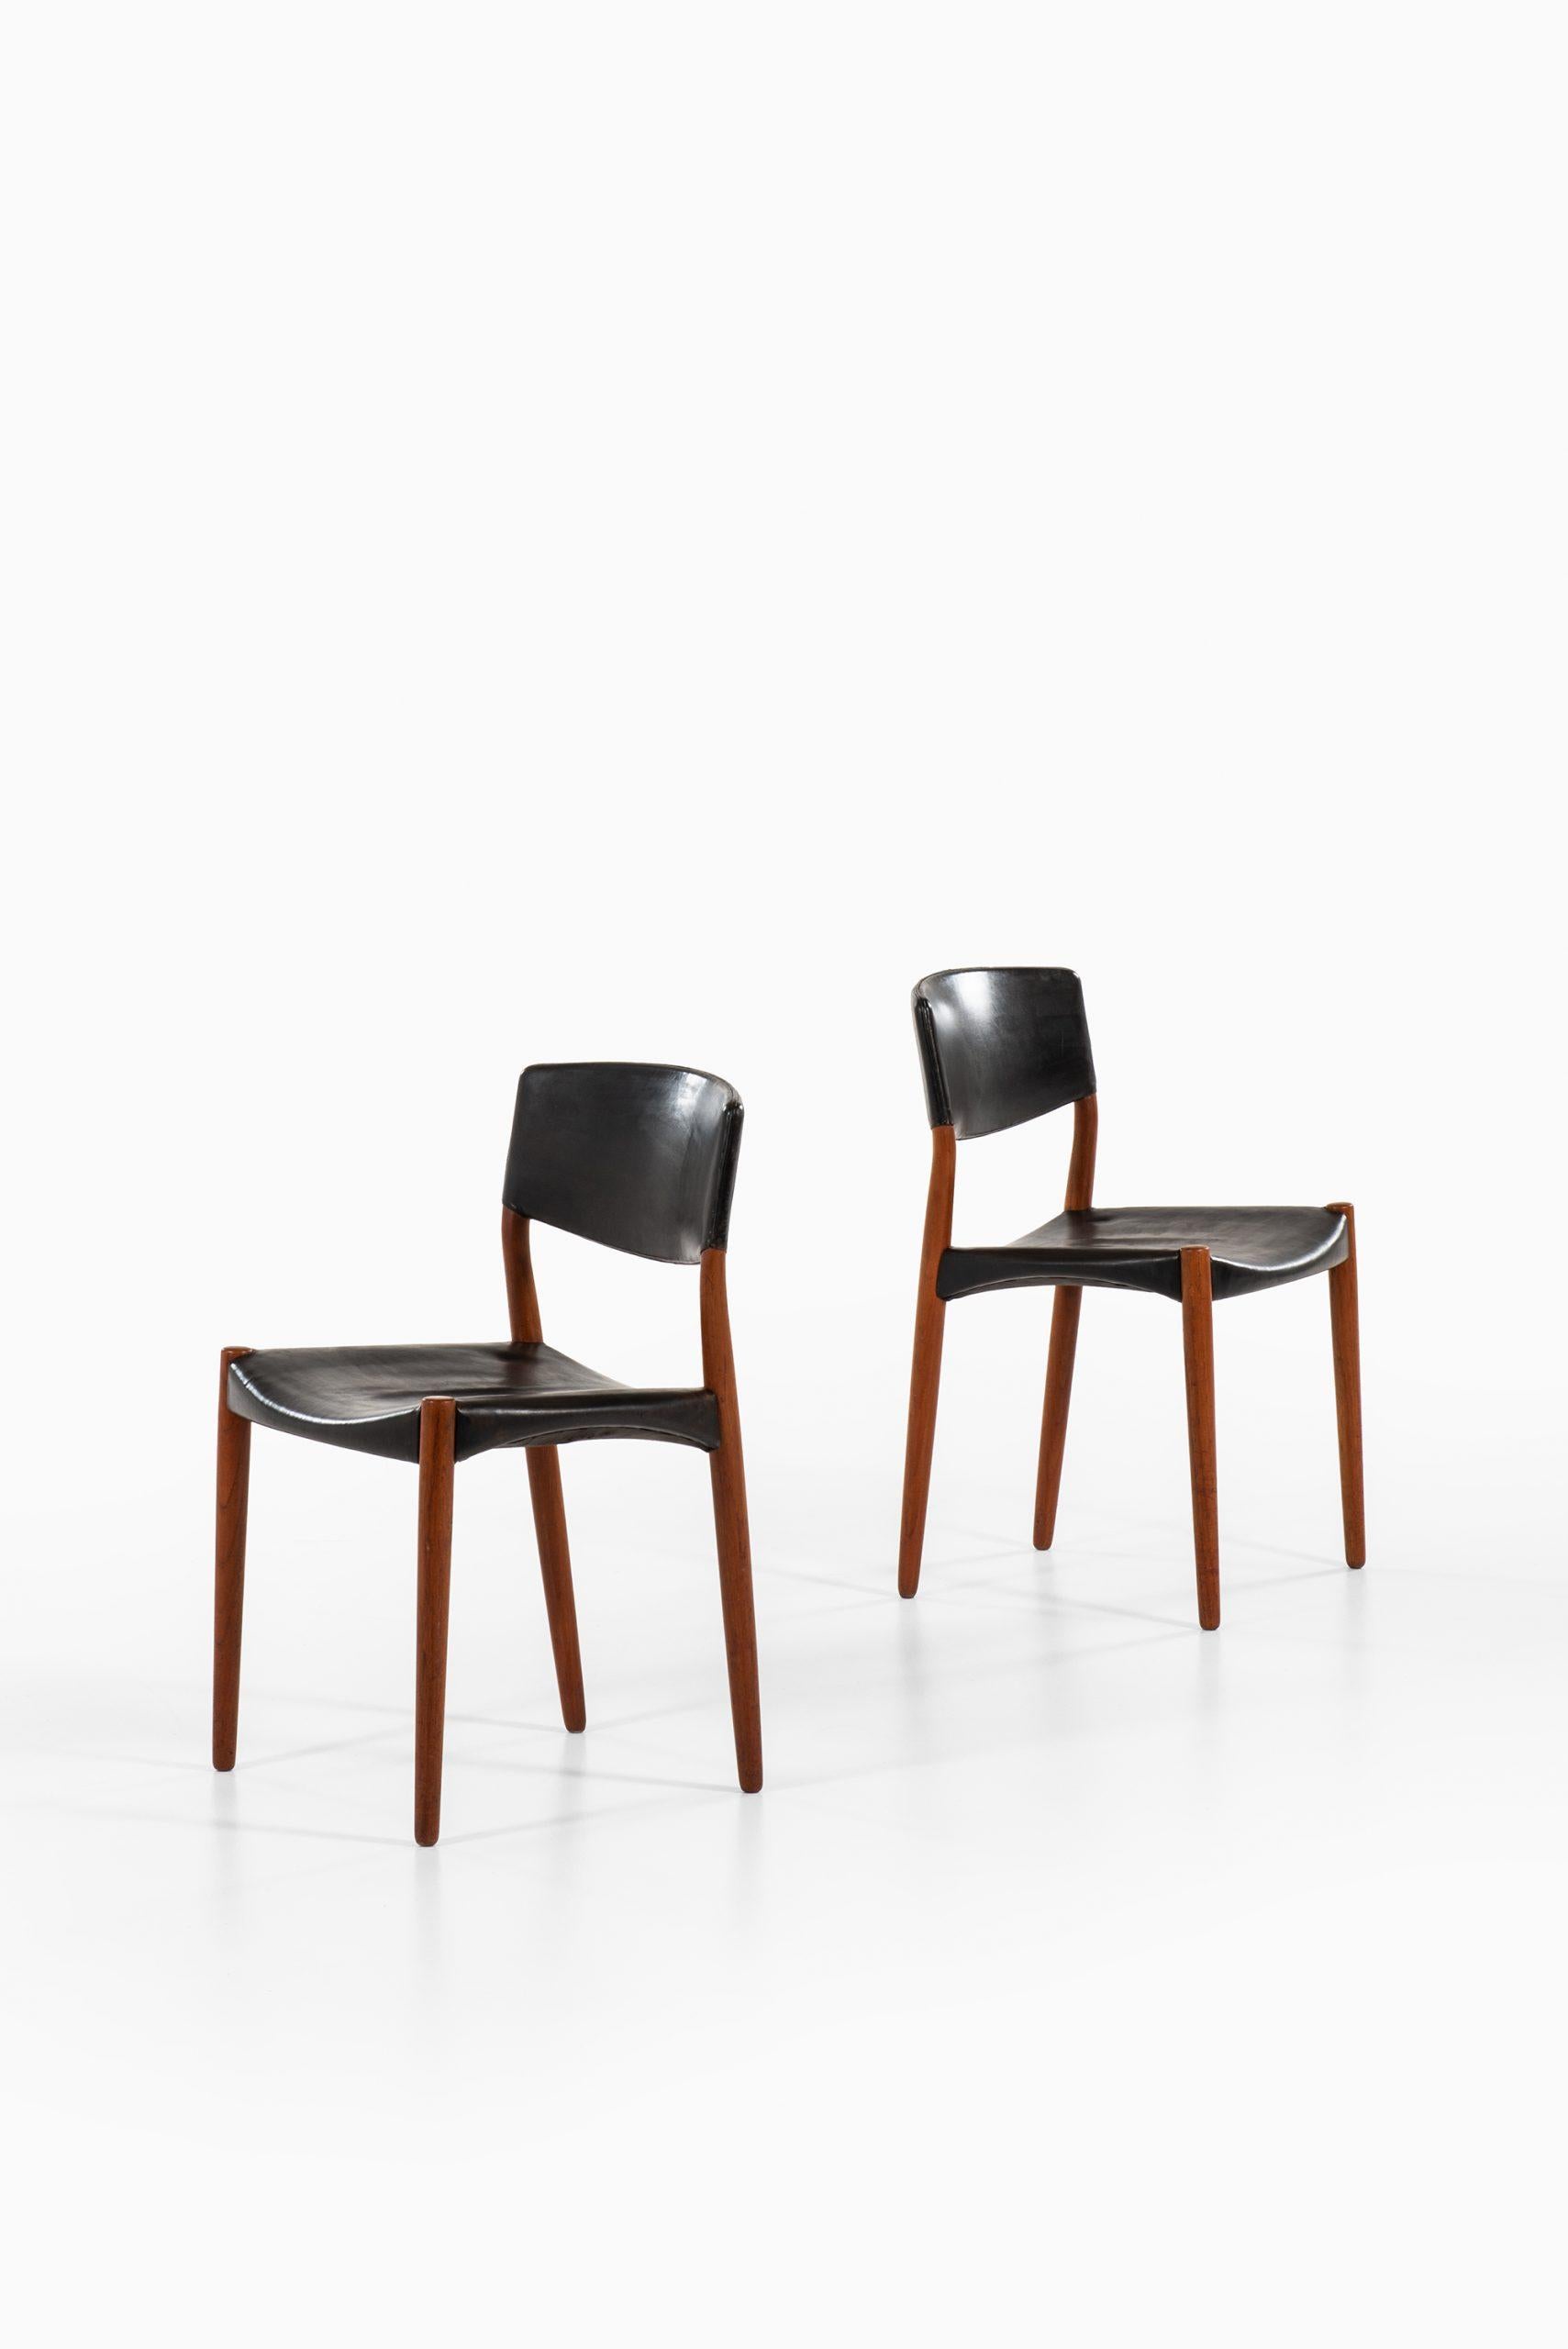 Scandinavian Modern Aksel Bender Madsen & Ejner Larsen Dining Chairs by Cabinetmaker Willy Beck For Sale